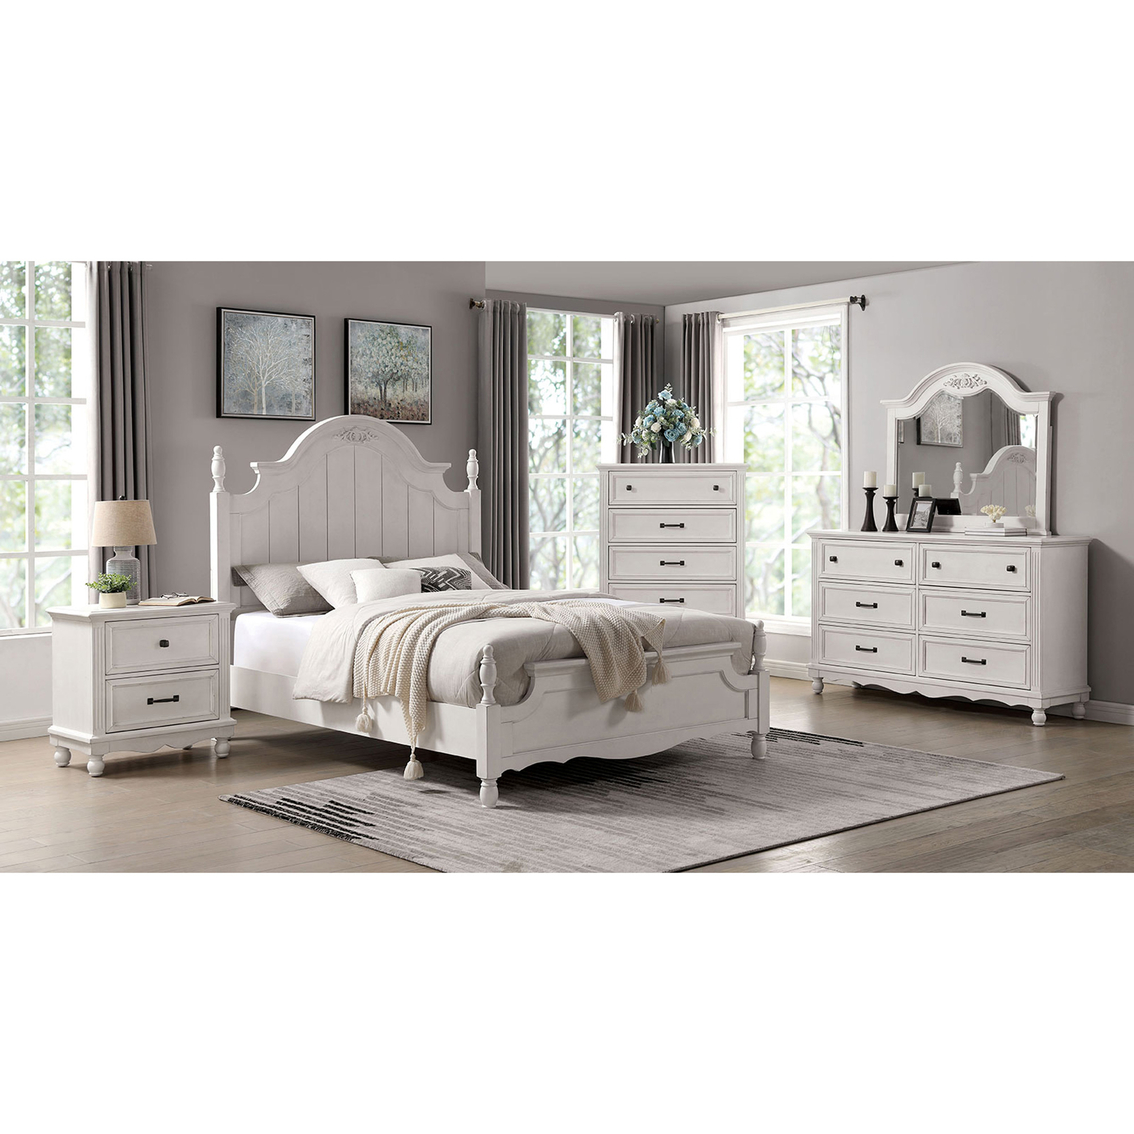 Furniture Of America Georgette Bed | Beds | Furniture & Appliances ...